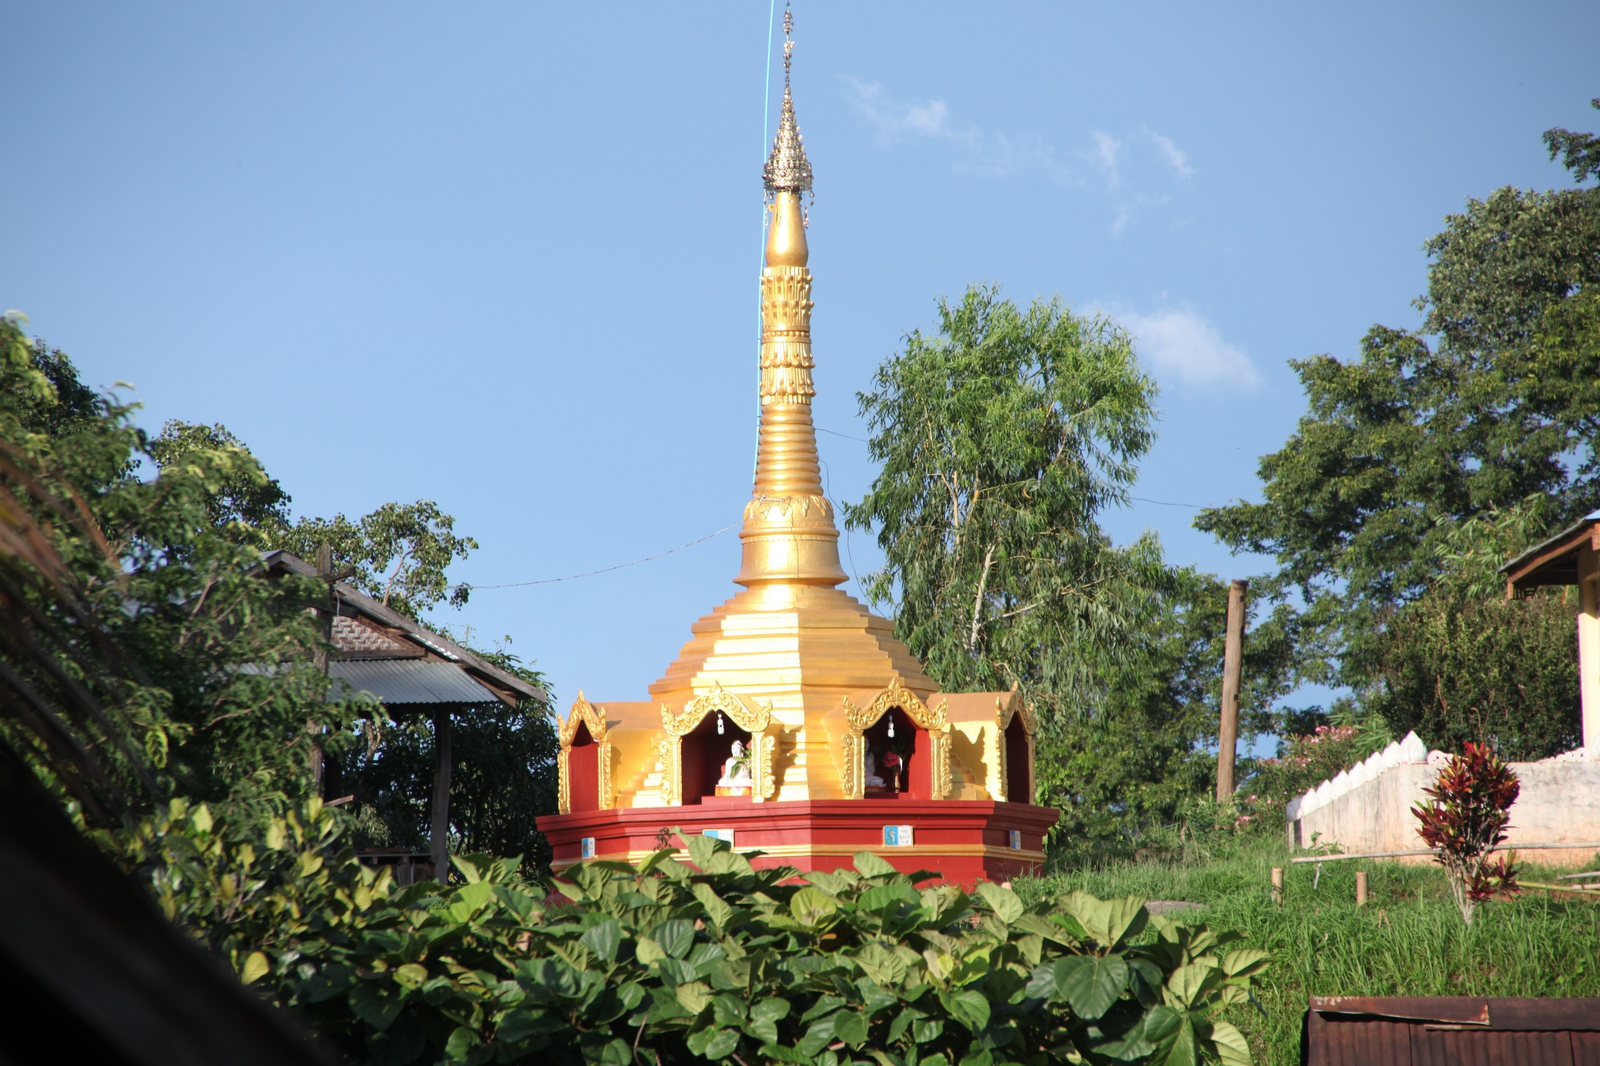 Pankam: Pagoda